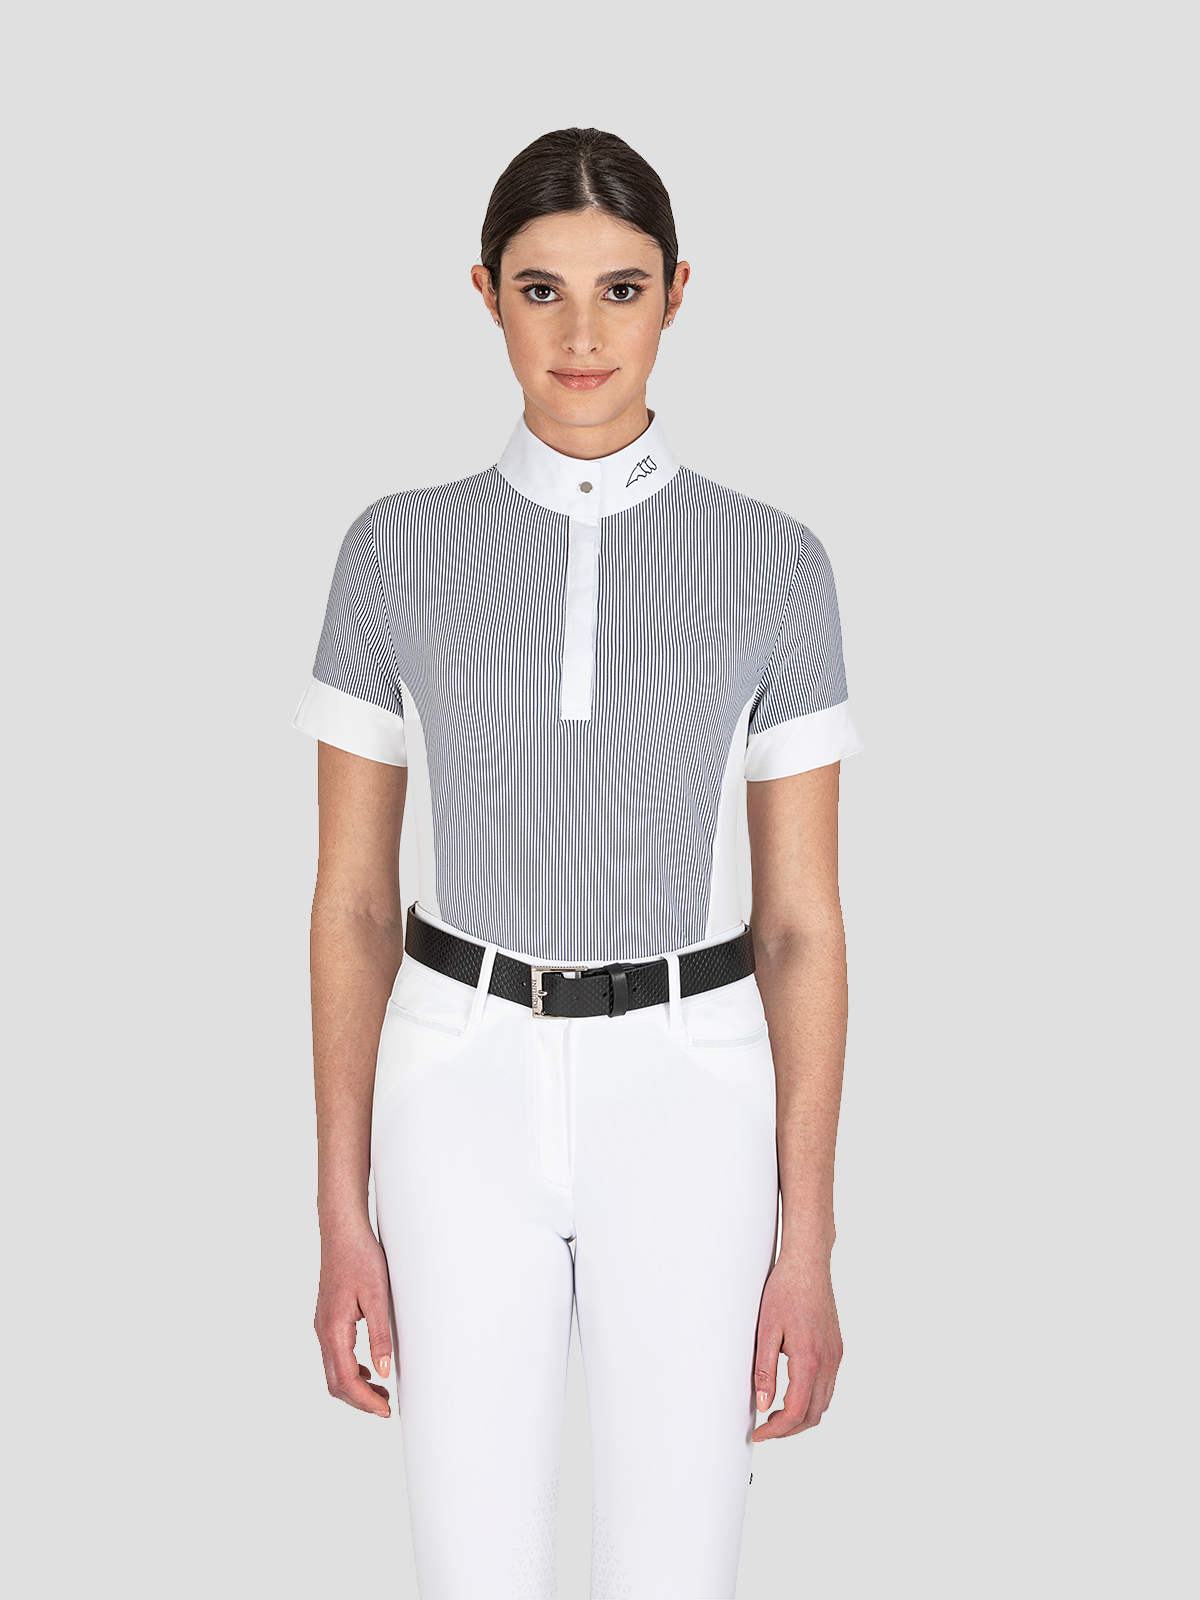 Eliciae Short Sleeve Women's Pinstripe Show Shirt - front view